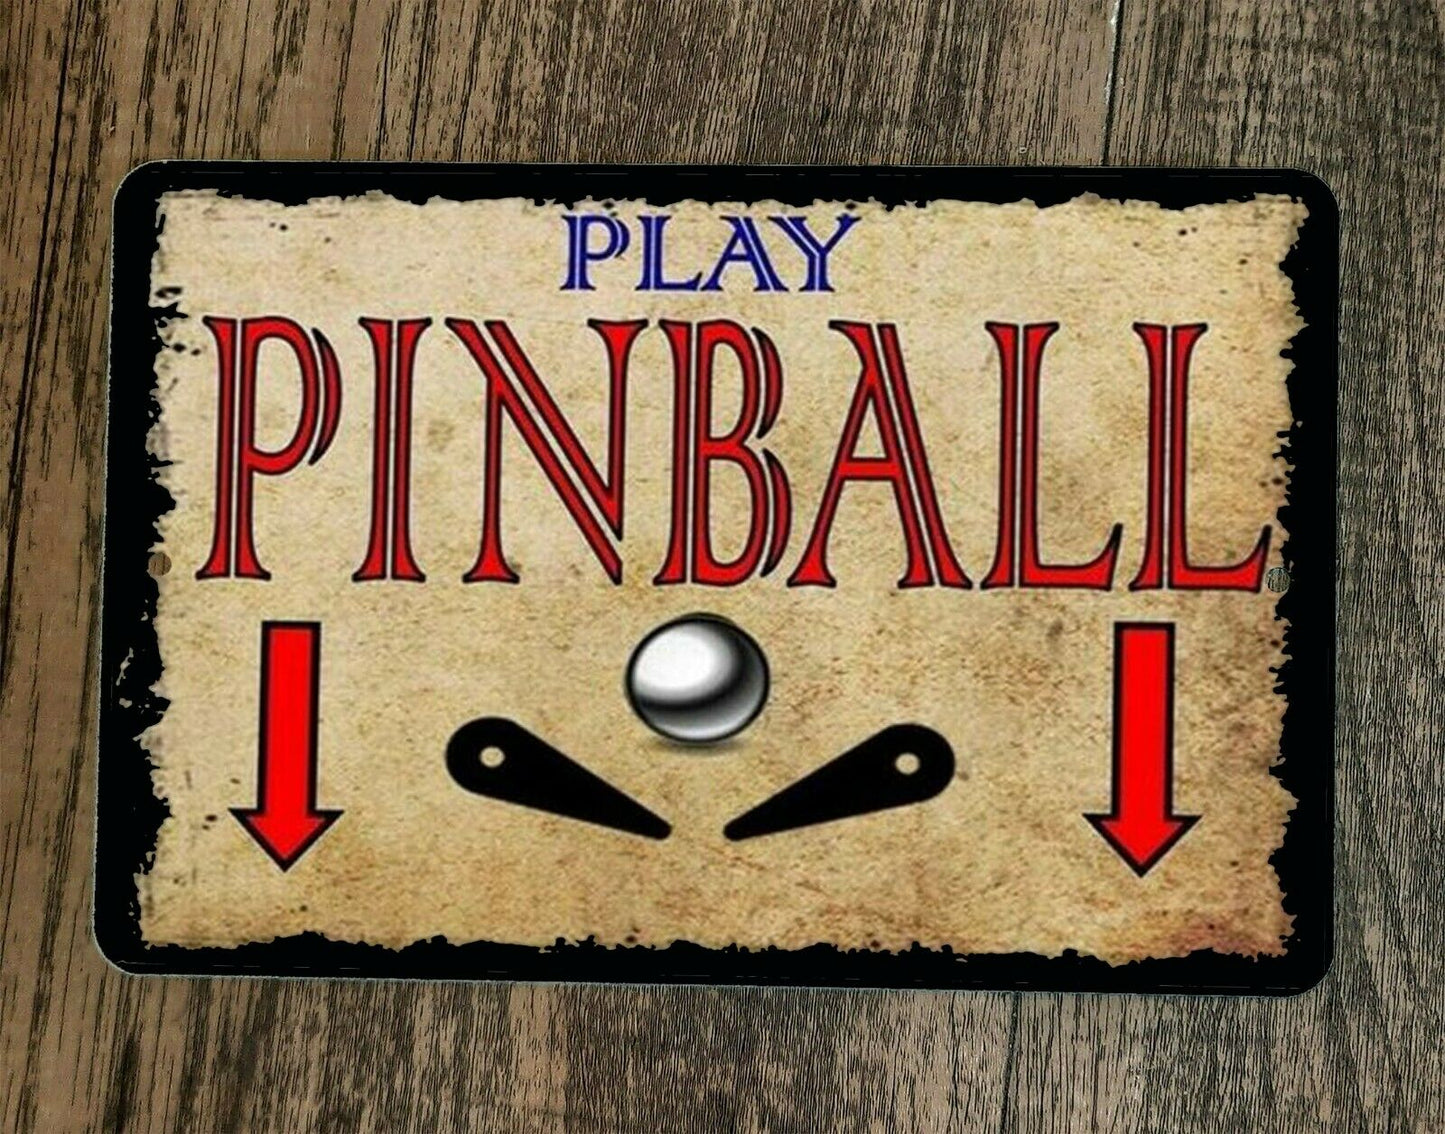 Play Pinball 8x12 Metal Wall Entertainment Sports Room Arcade Bar Sign